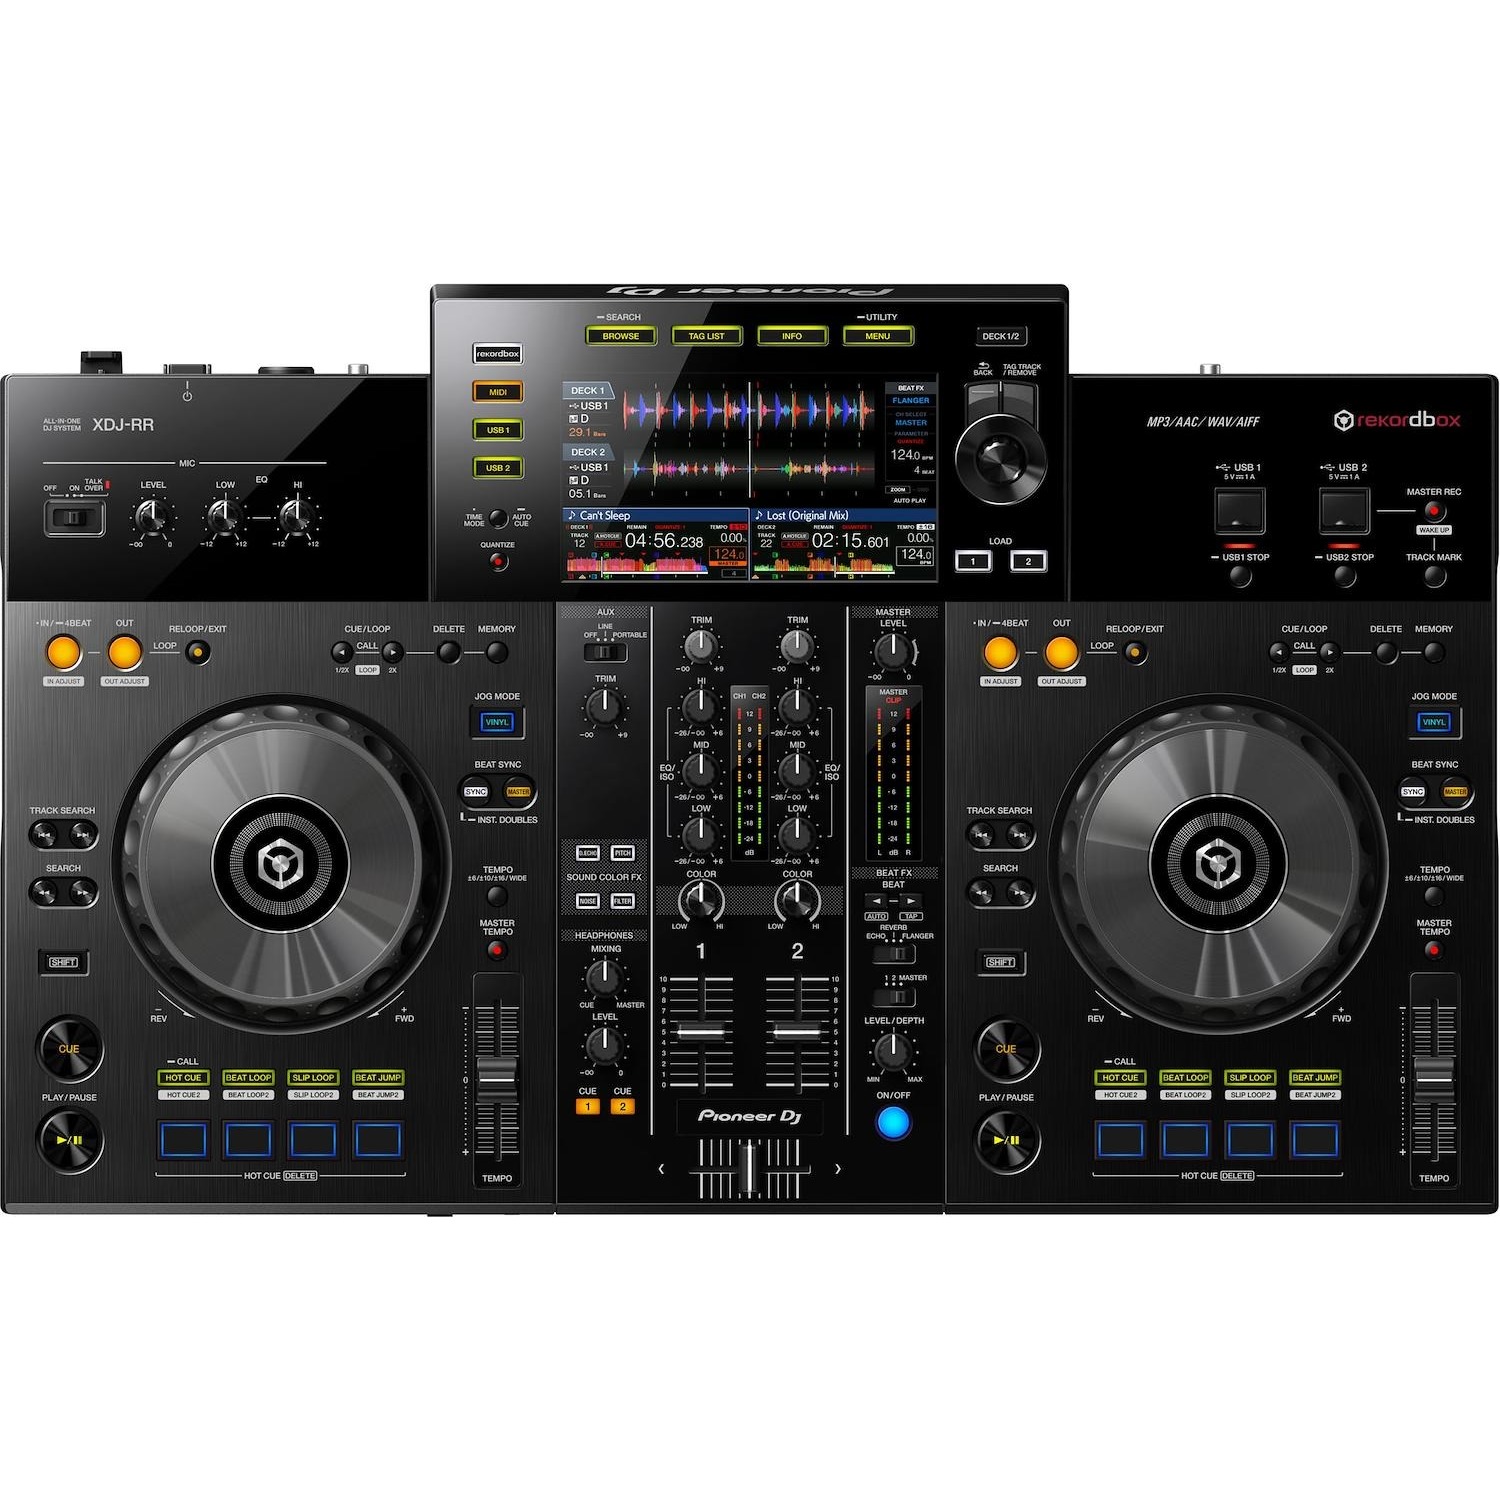 Immagine per Mixer Pioneer DJ XDJ-RR all in one                rekordbox system da DIMOStore